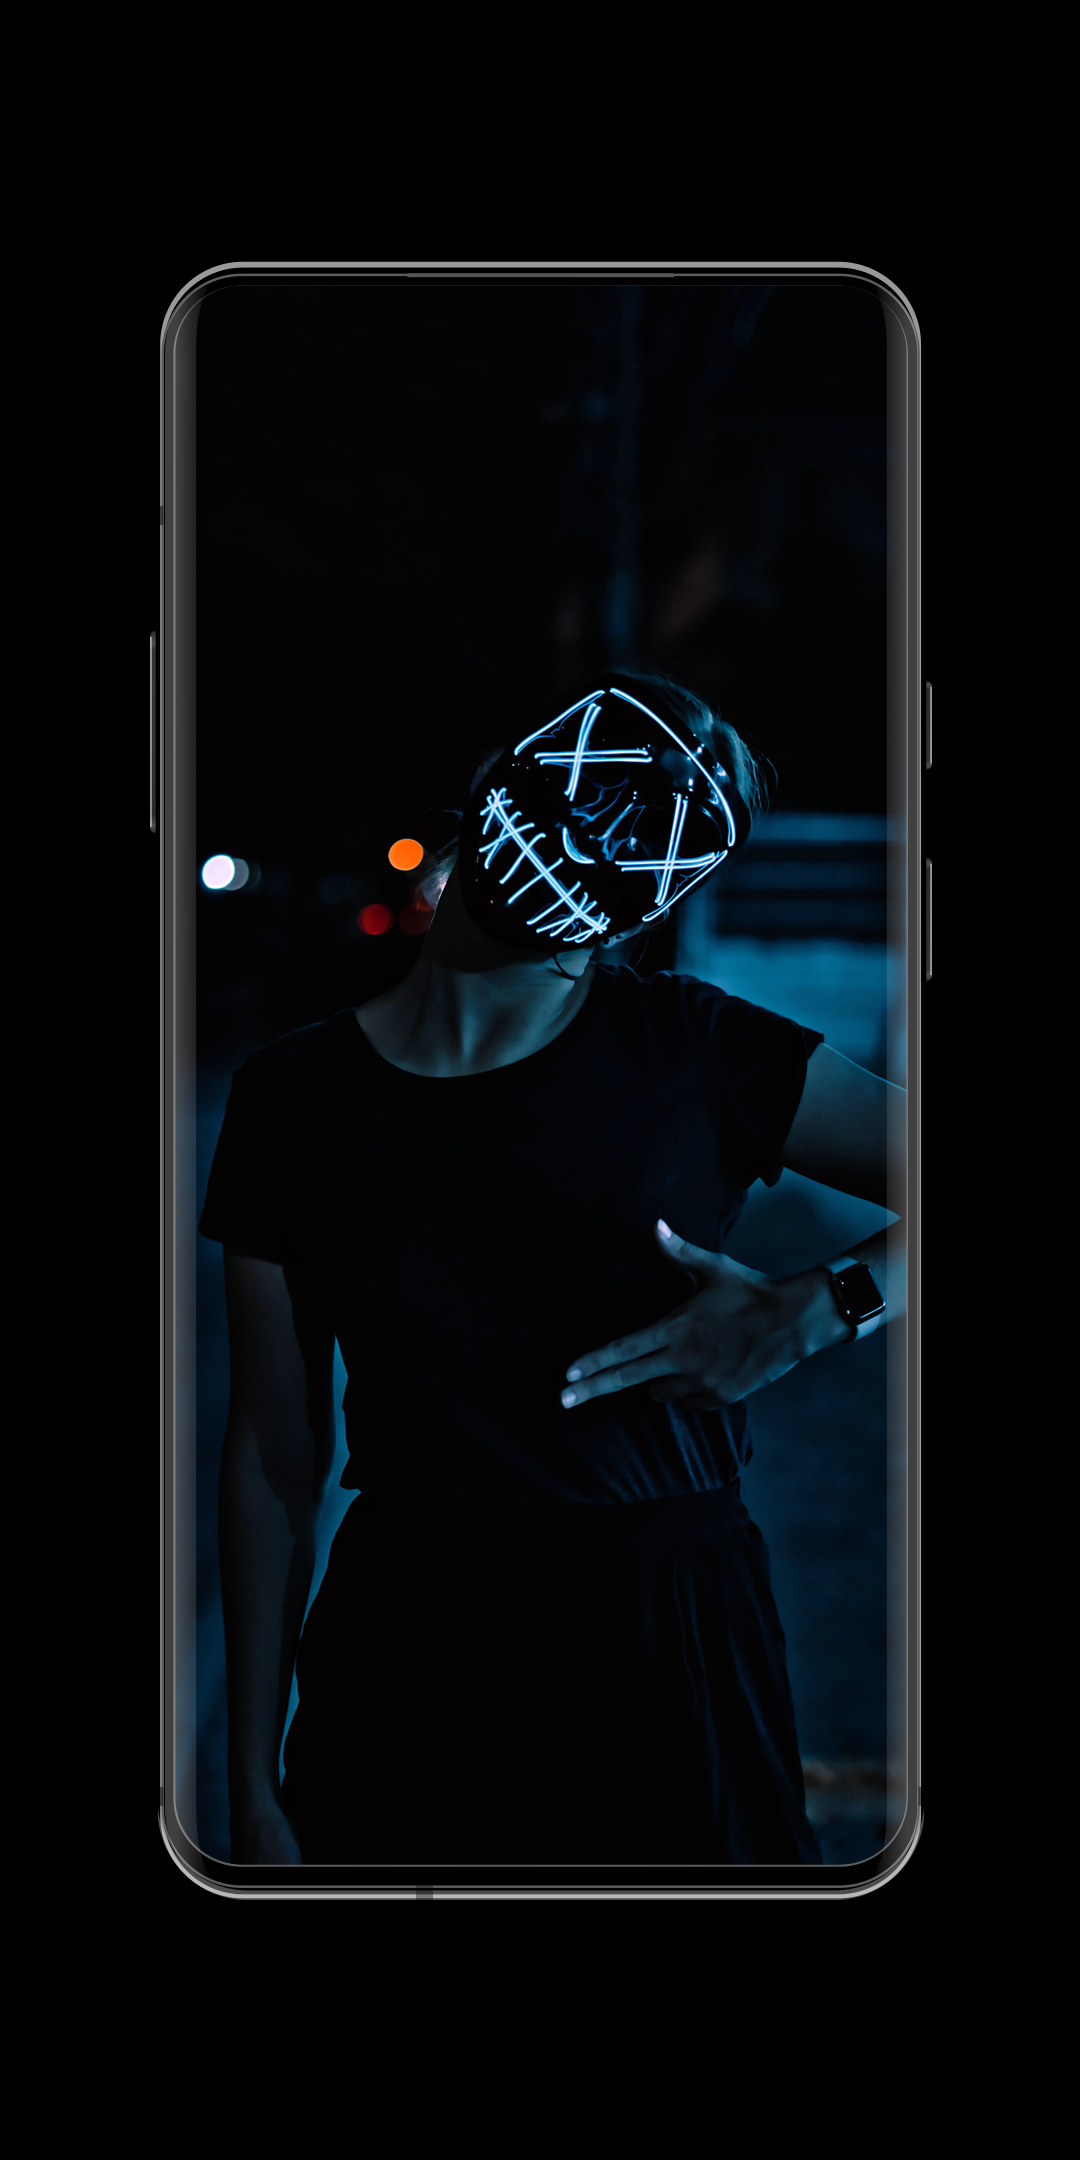 Tentang wallpaper 4k dark android Terkini - Cyberpunkwall